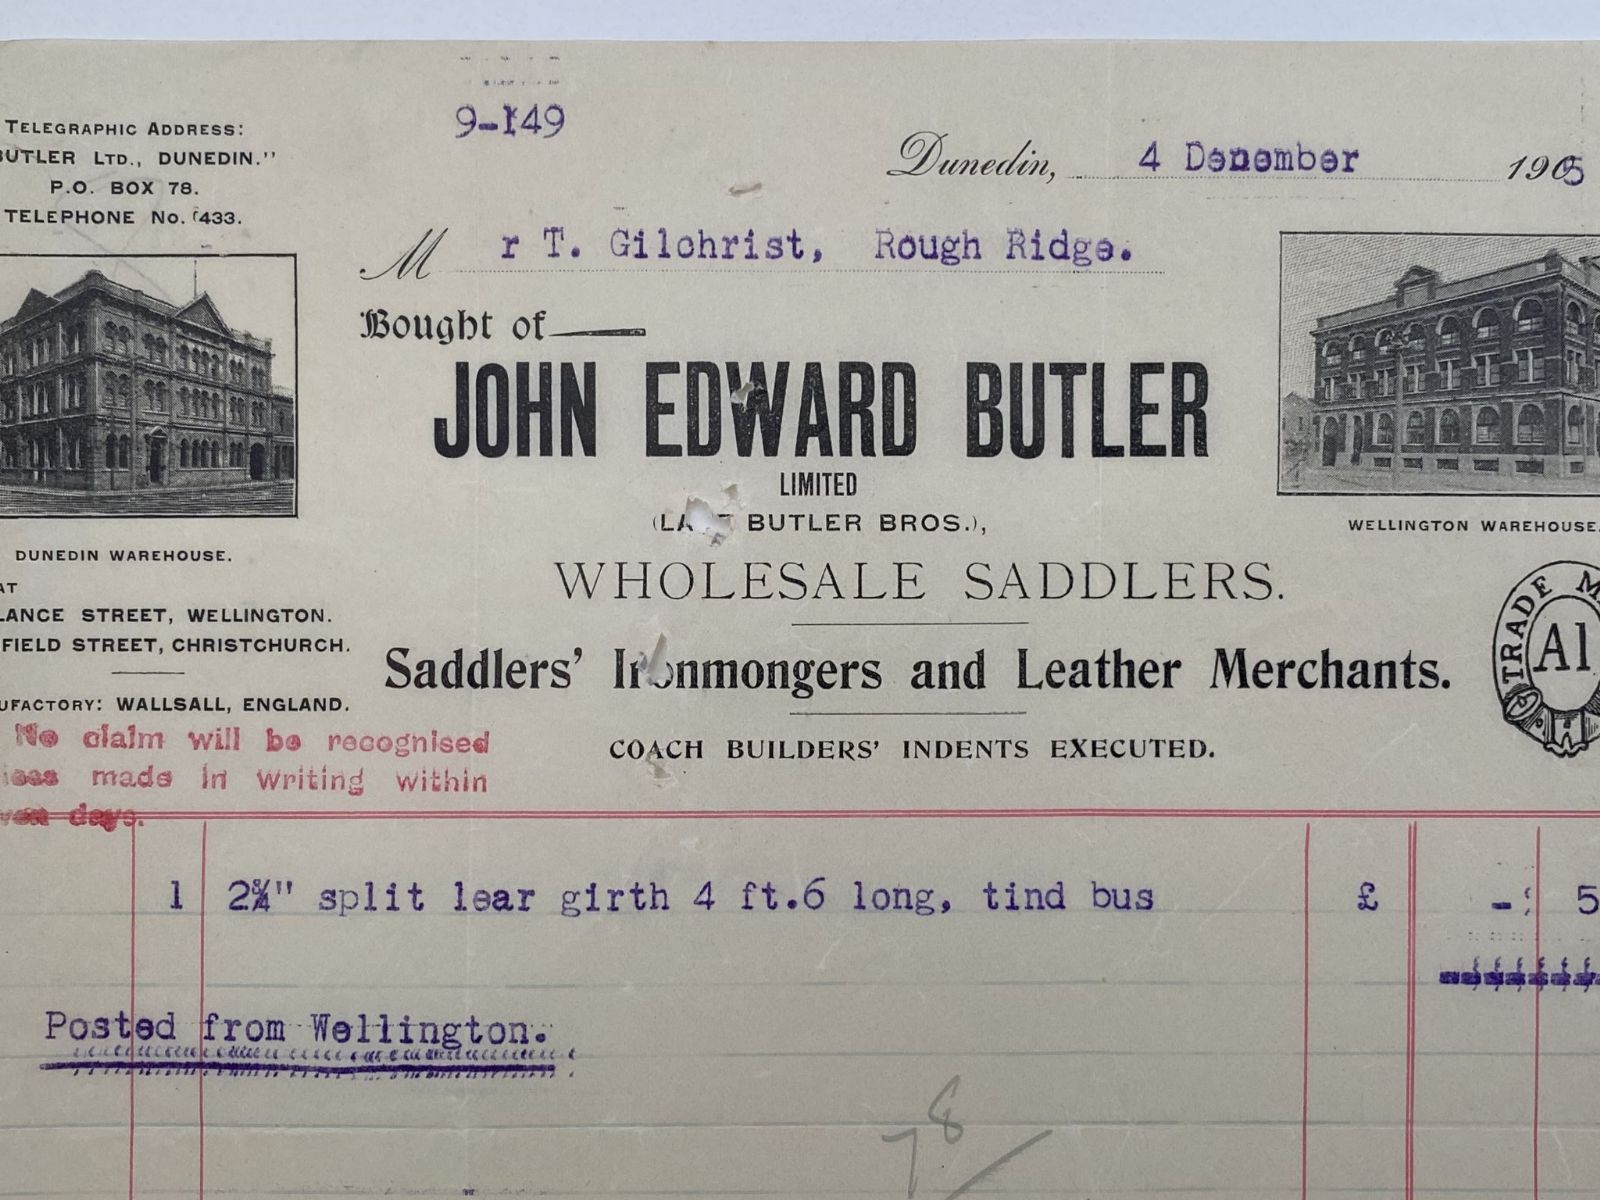 ANTIQUE INVOICE / RECEIPT: John Edward Butler, Dunedin - Saddlers 1905